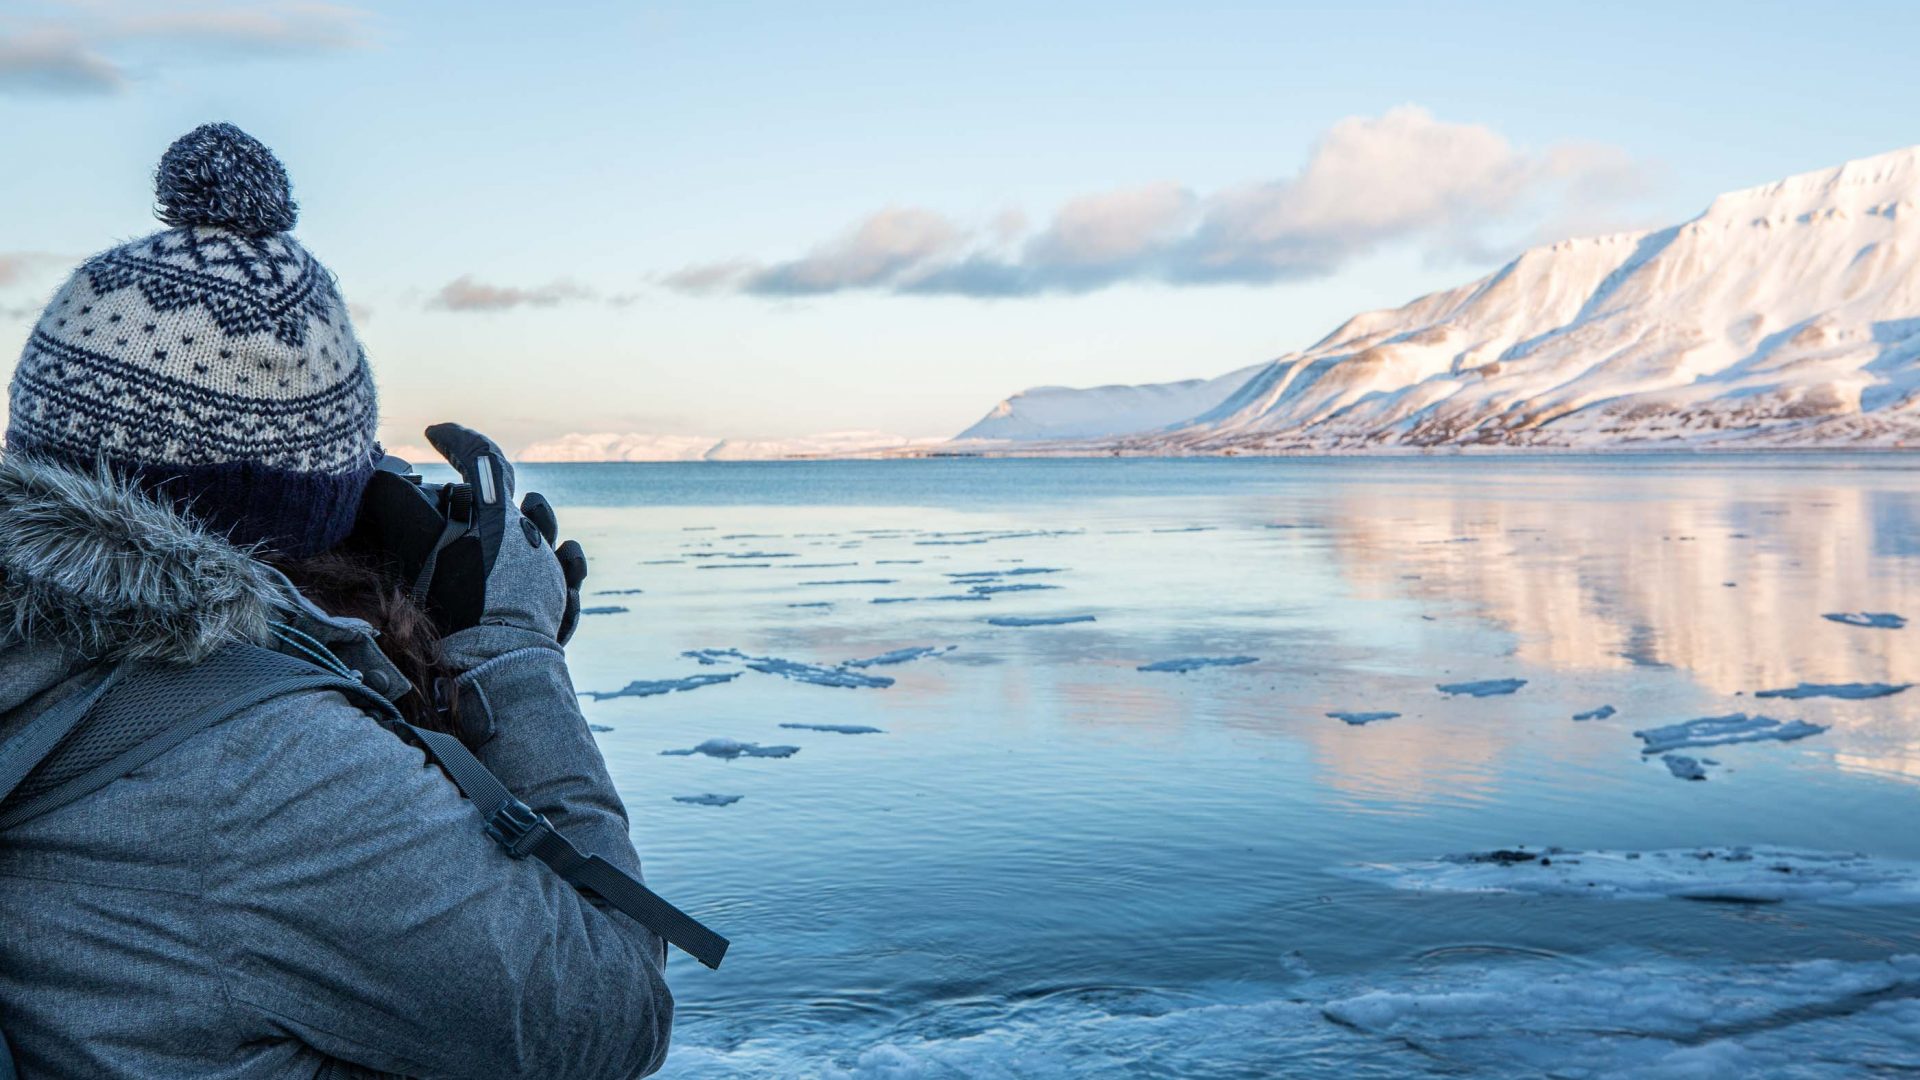 Photographer Nori is seen photographing icebergs.